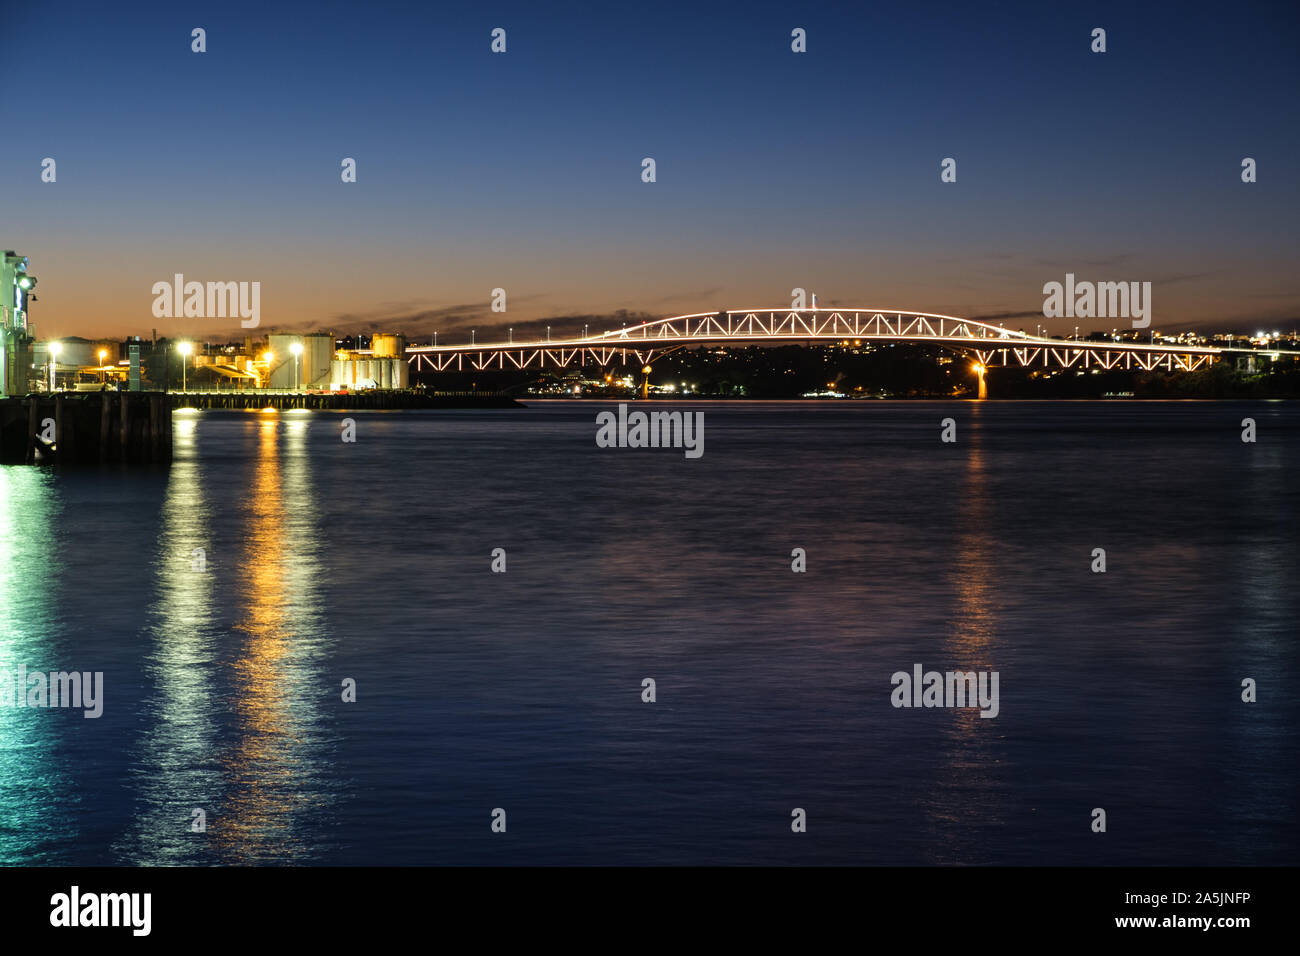 Auckland, New Zealand - April 15, 2019: Auckland Harbour Bridge, the second-longest road bridge in New Zealand. Night view. Stock Photo